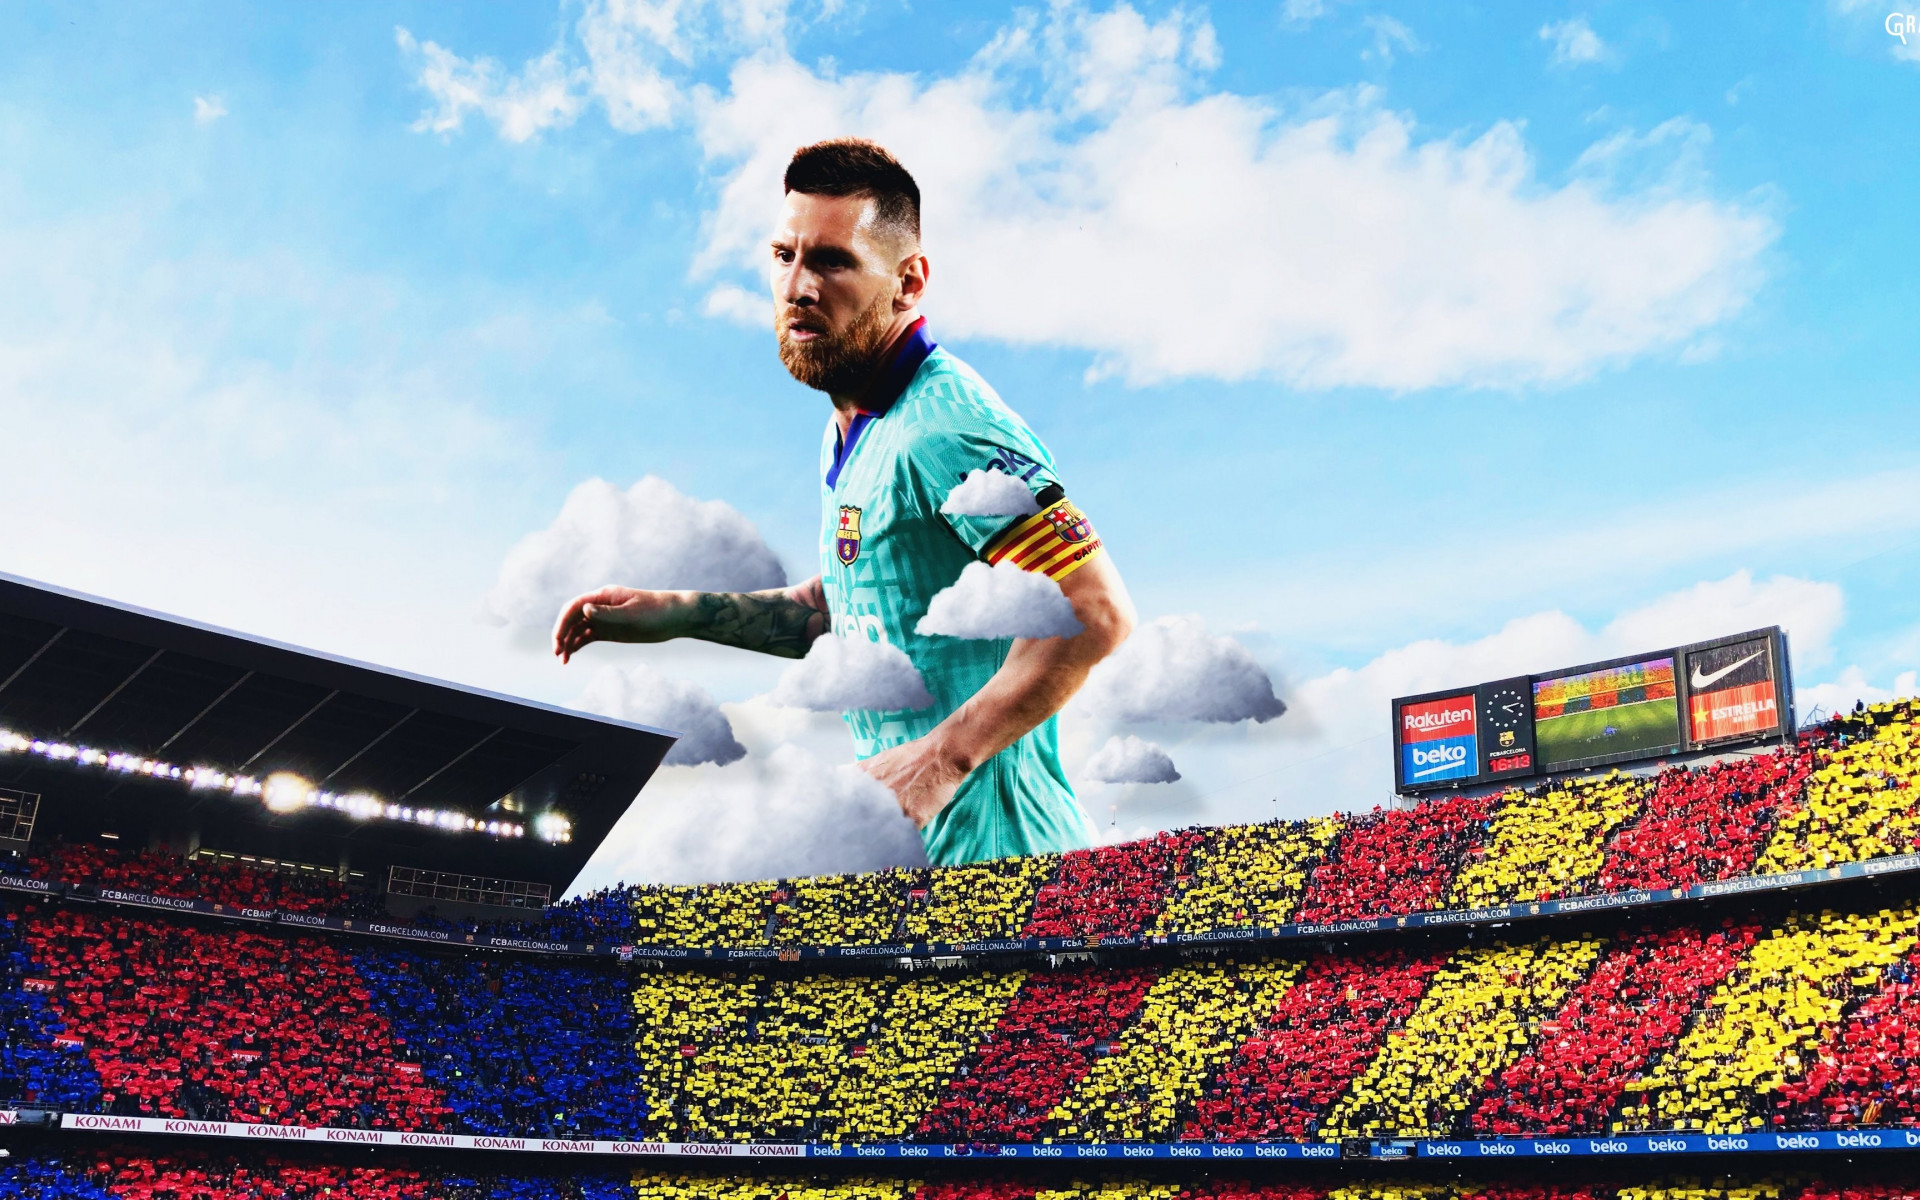 Download wallpaper: Lionel Messi 1920x1200